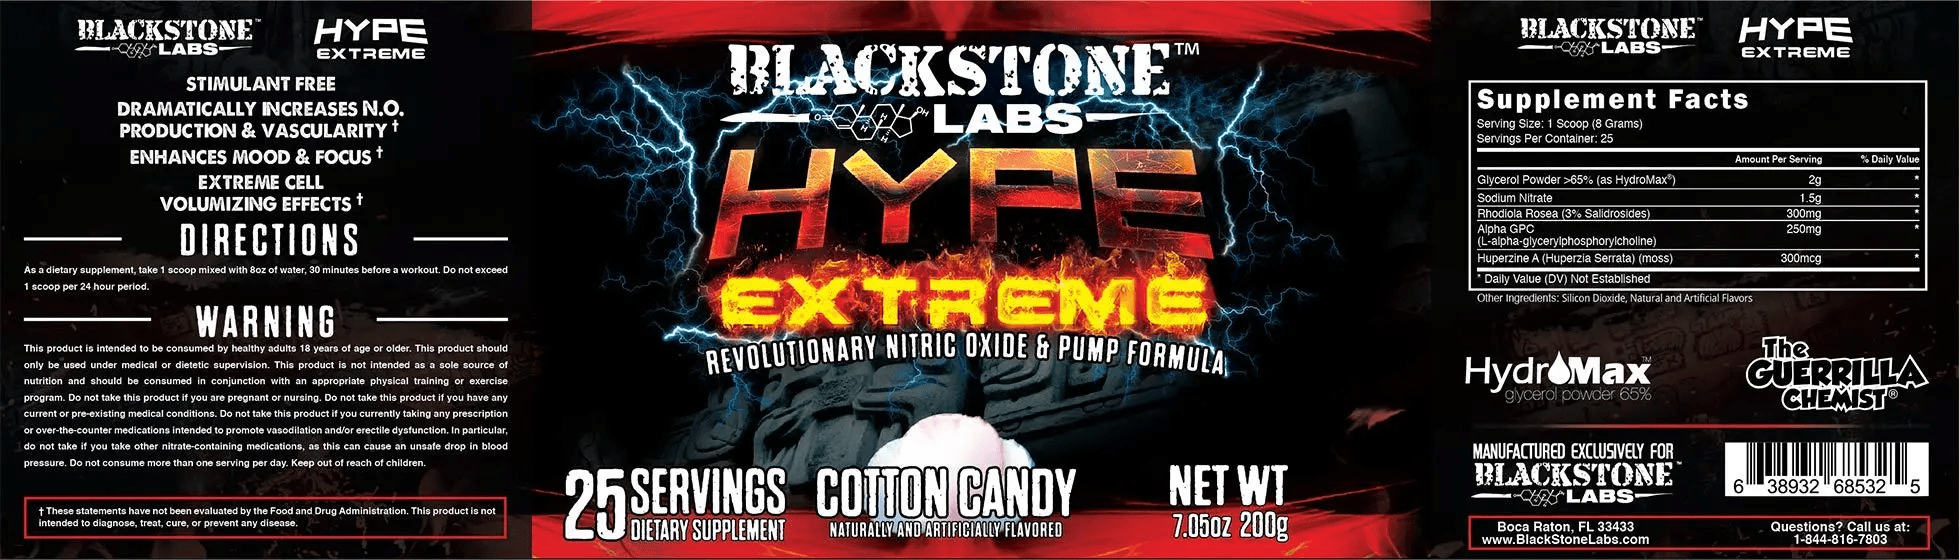 Blackstone labs  Hype Extreme 200g / 25 servings,  ml, Blackstone Labs. Pre Workout